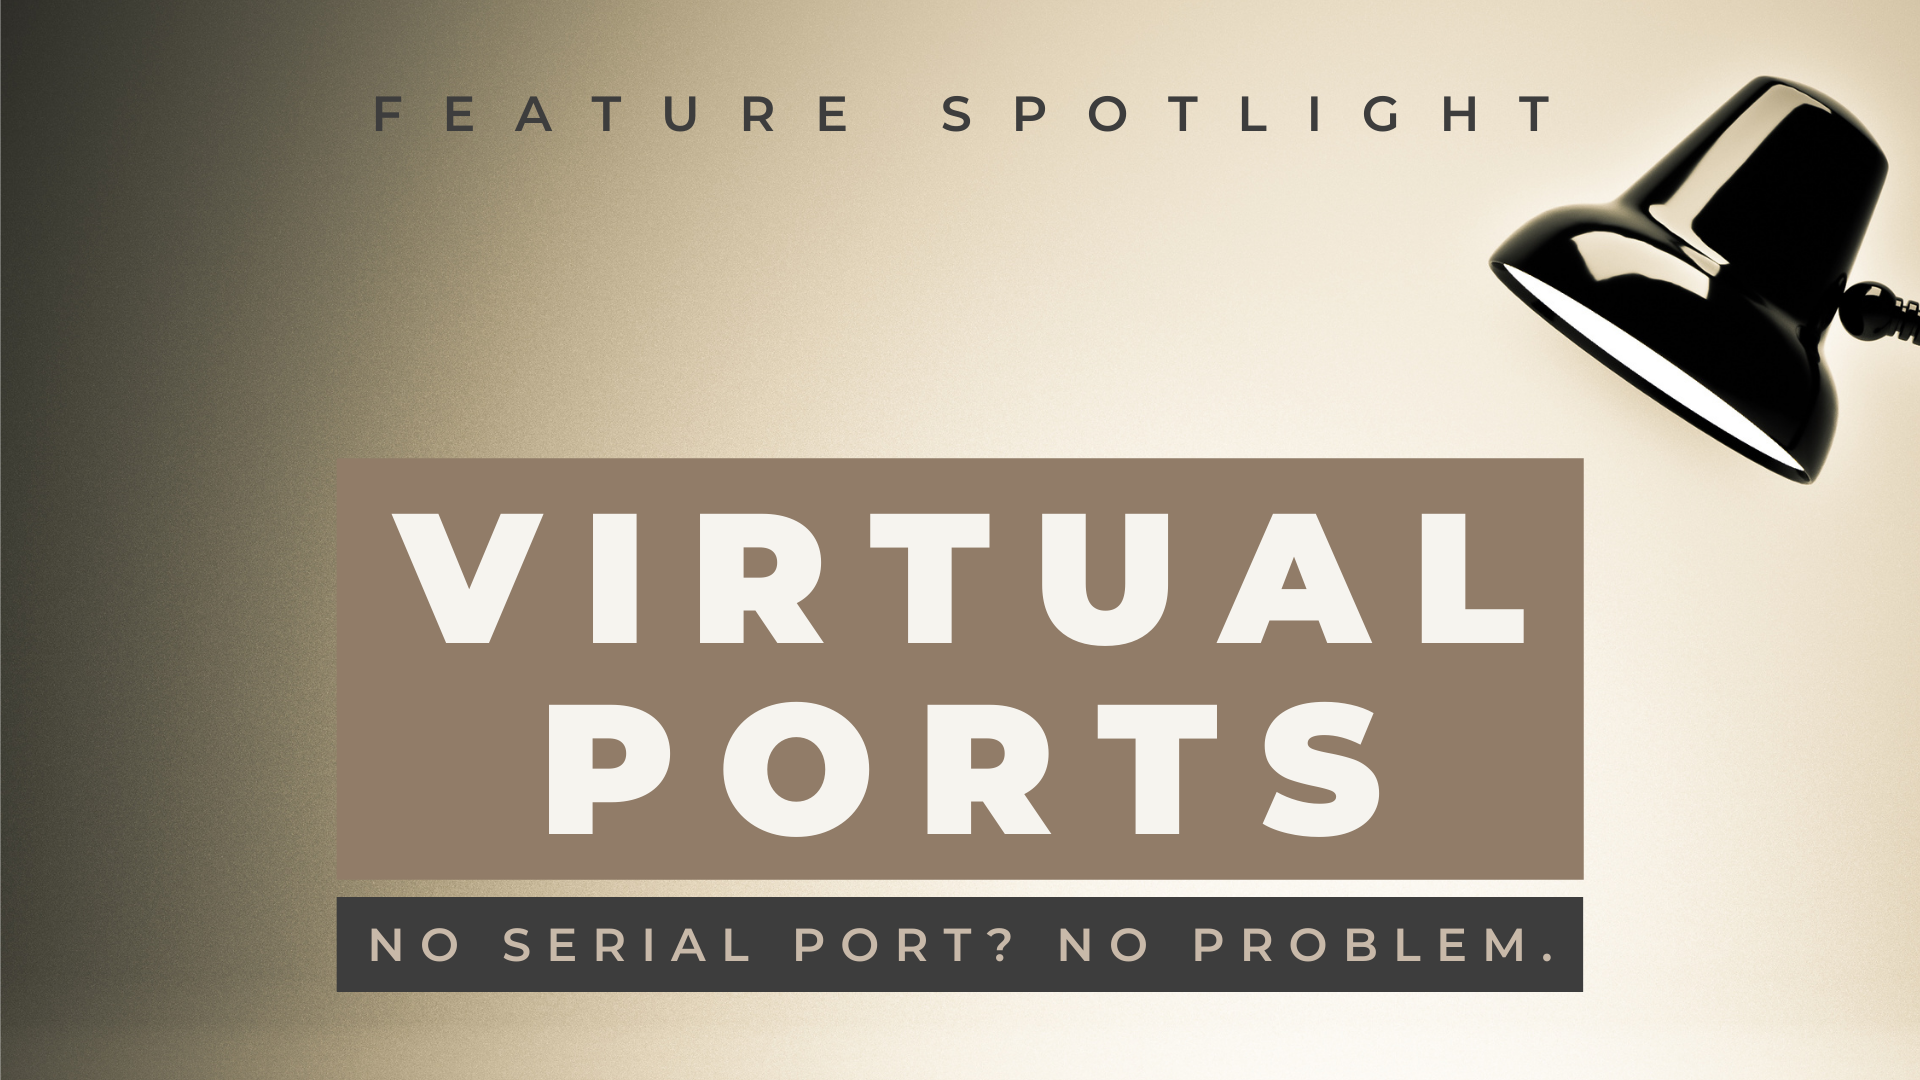 Feature Spotlight: Virtual Ports